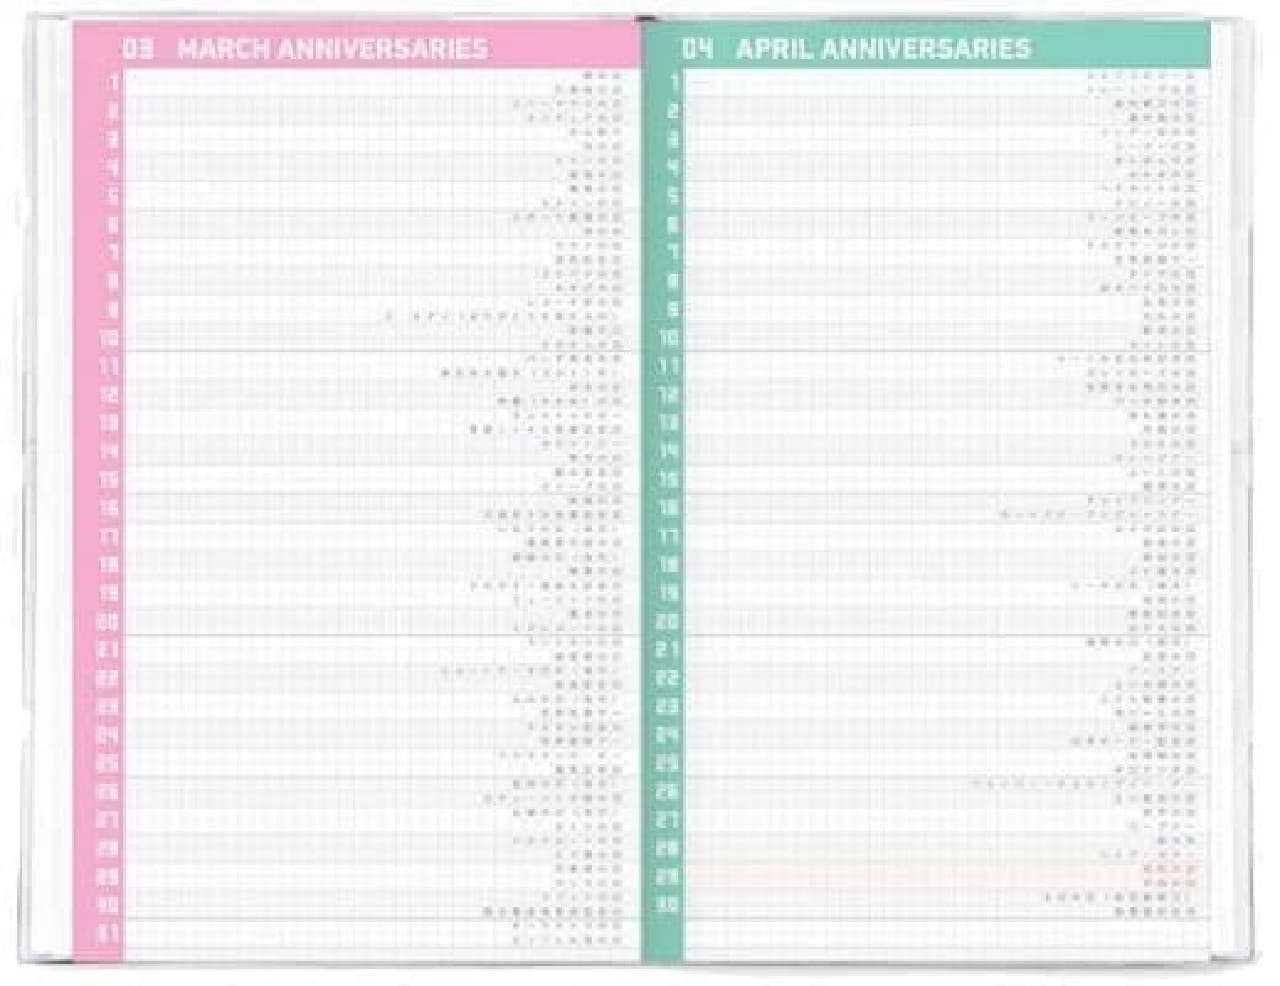 Year-round anniversary table where you can write birthdays and anniversaries